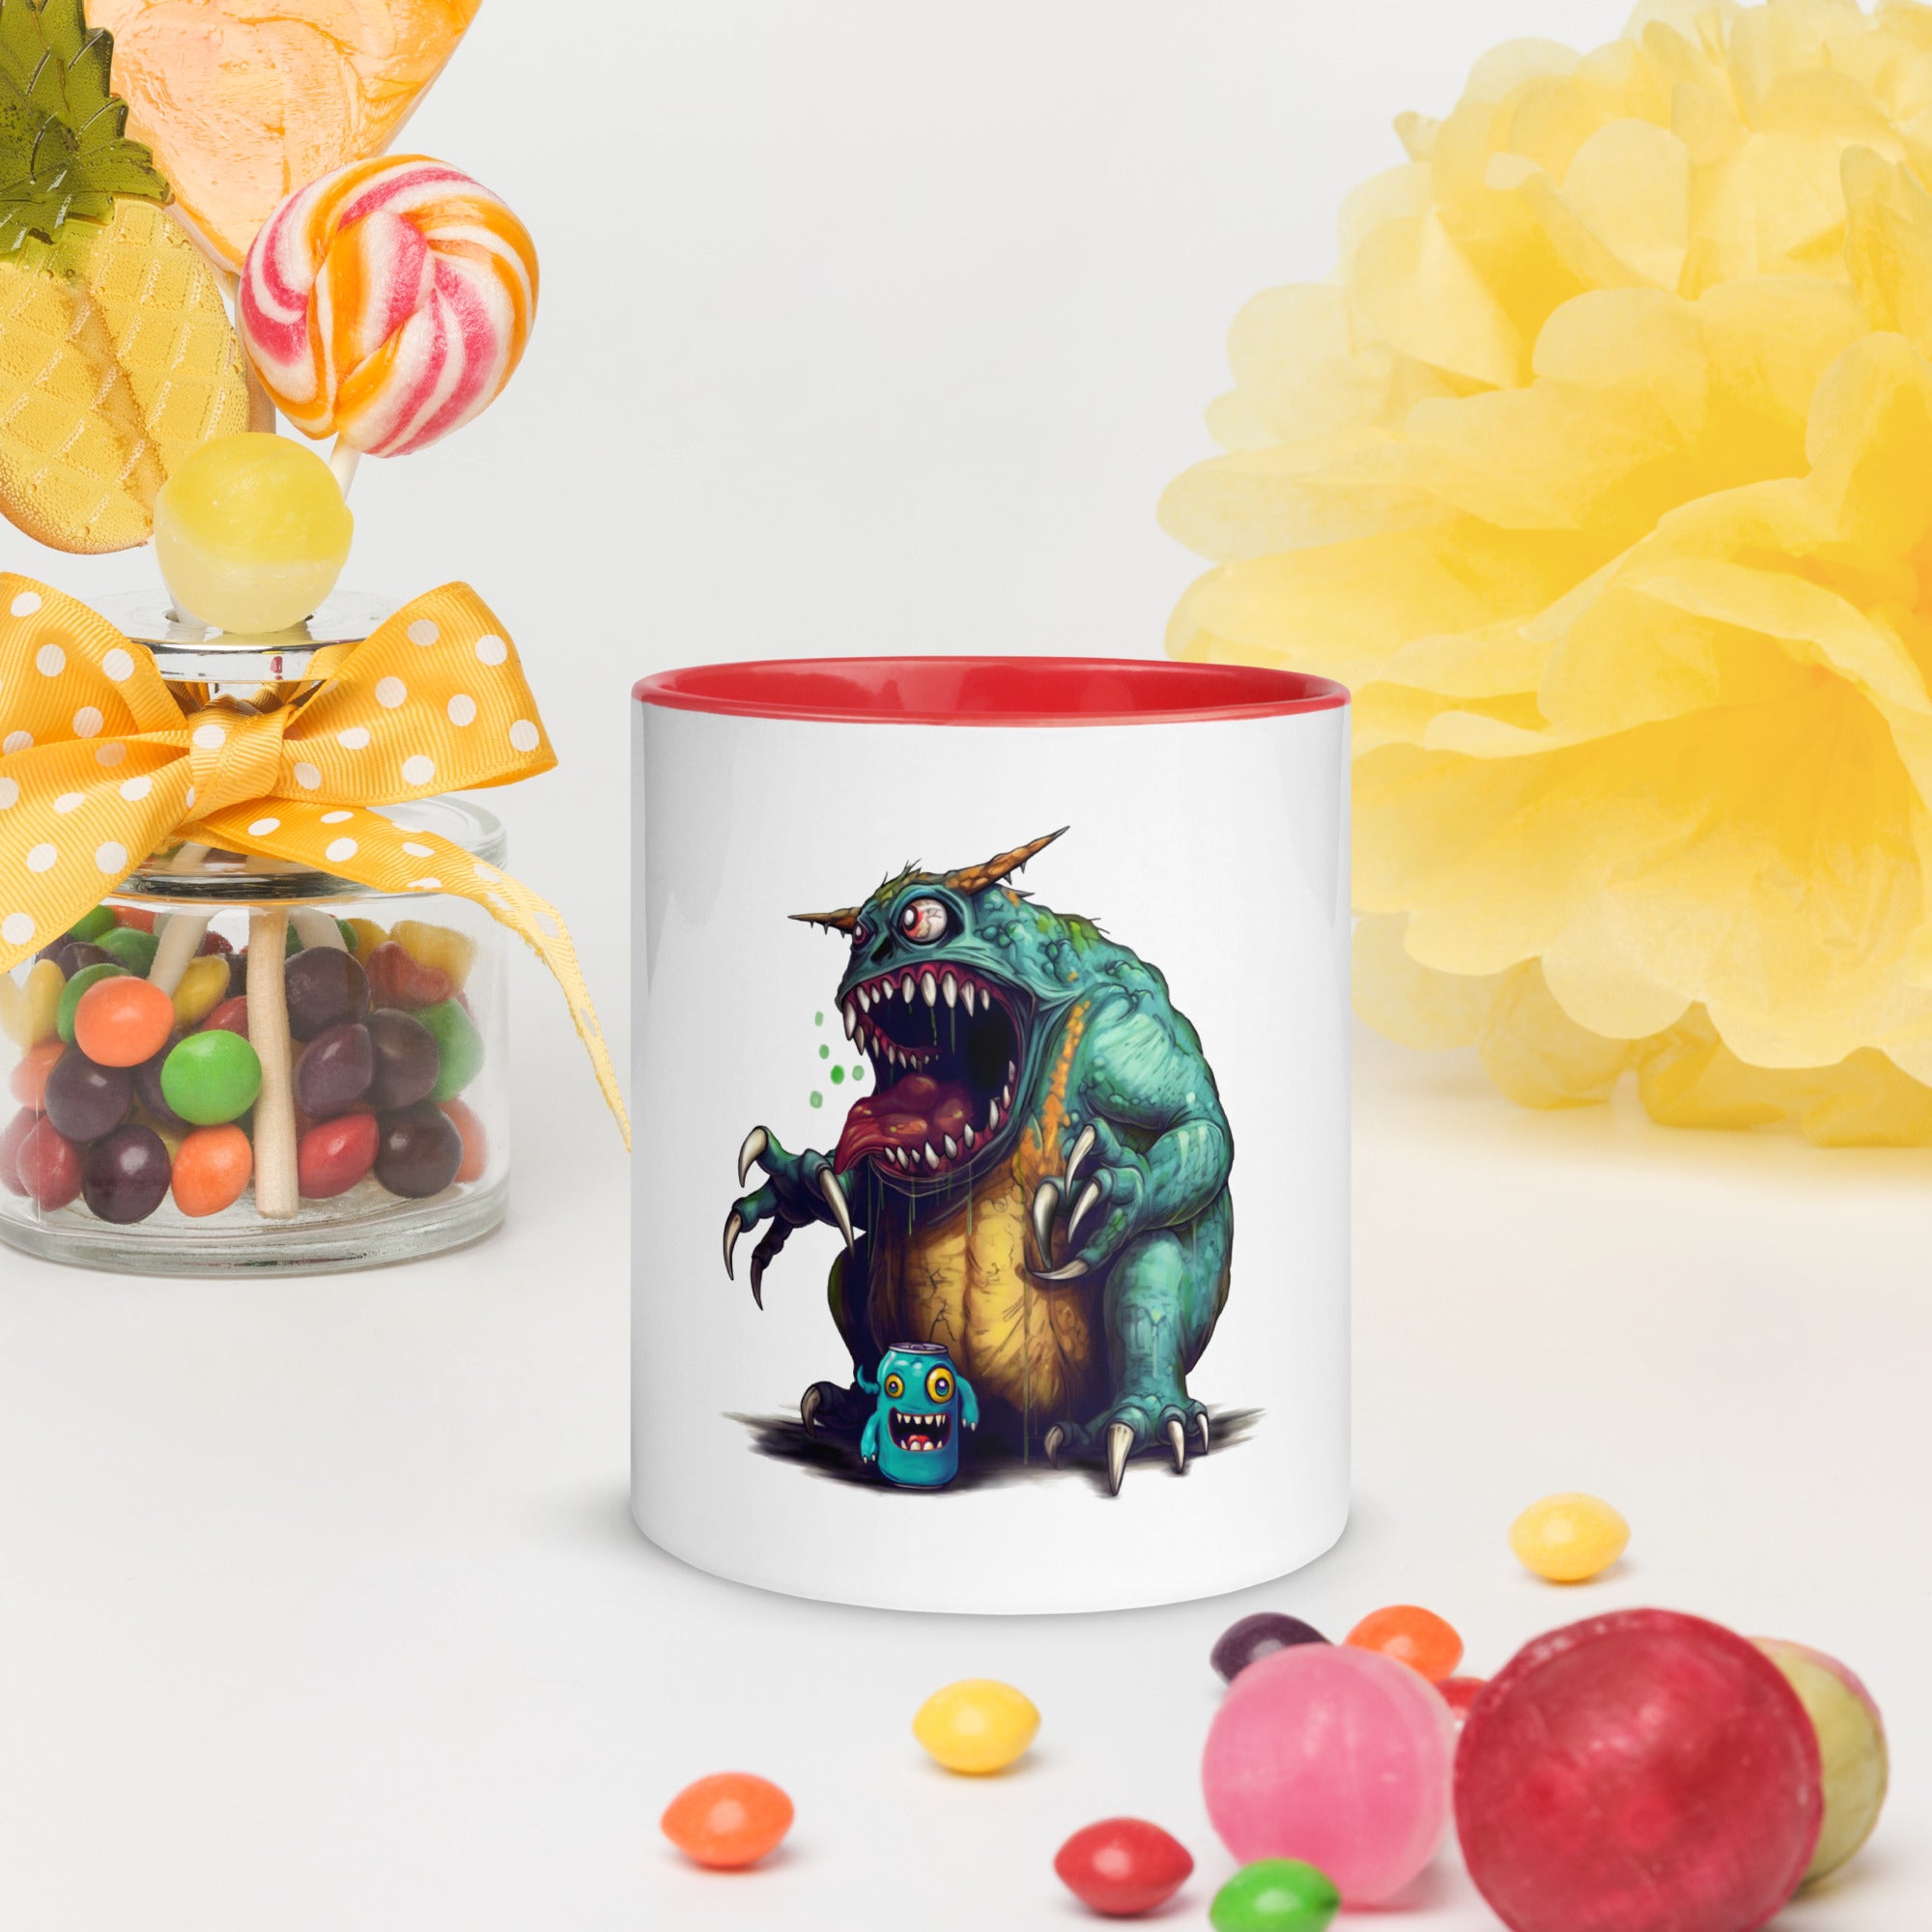 Monster Energy Drink Mug: A Hilarious Burping Monster Design by Behram Agha